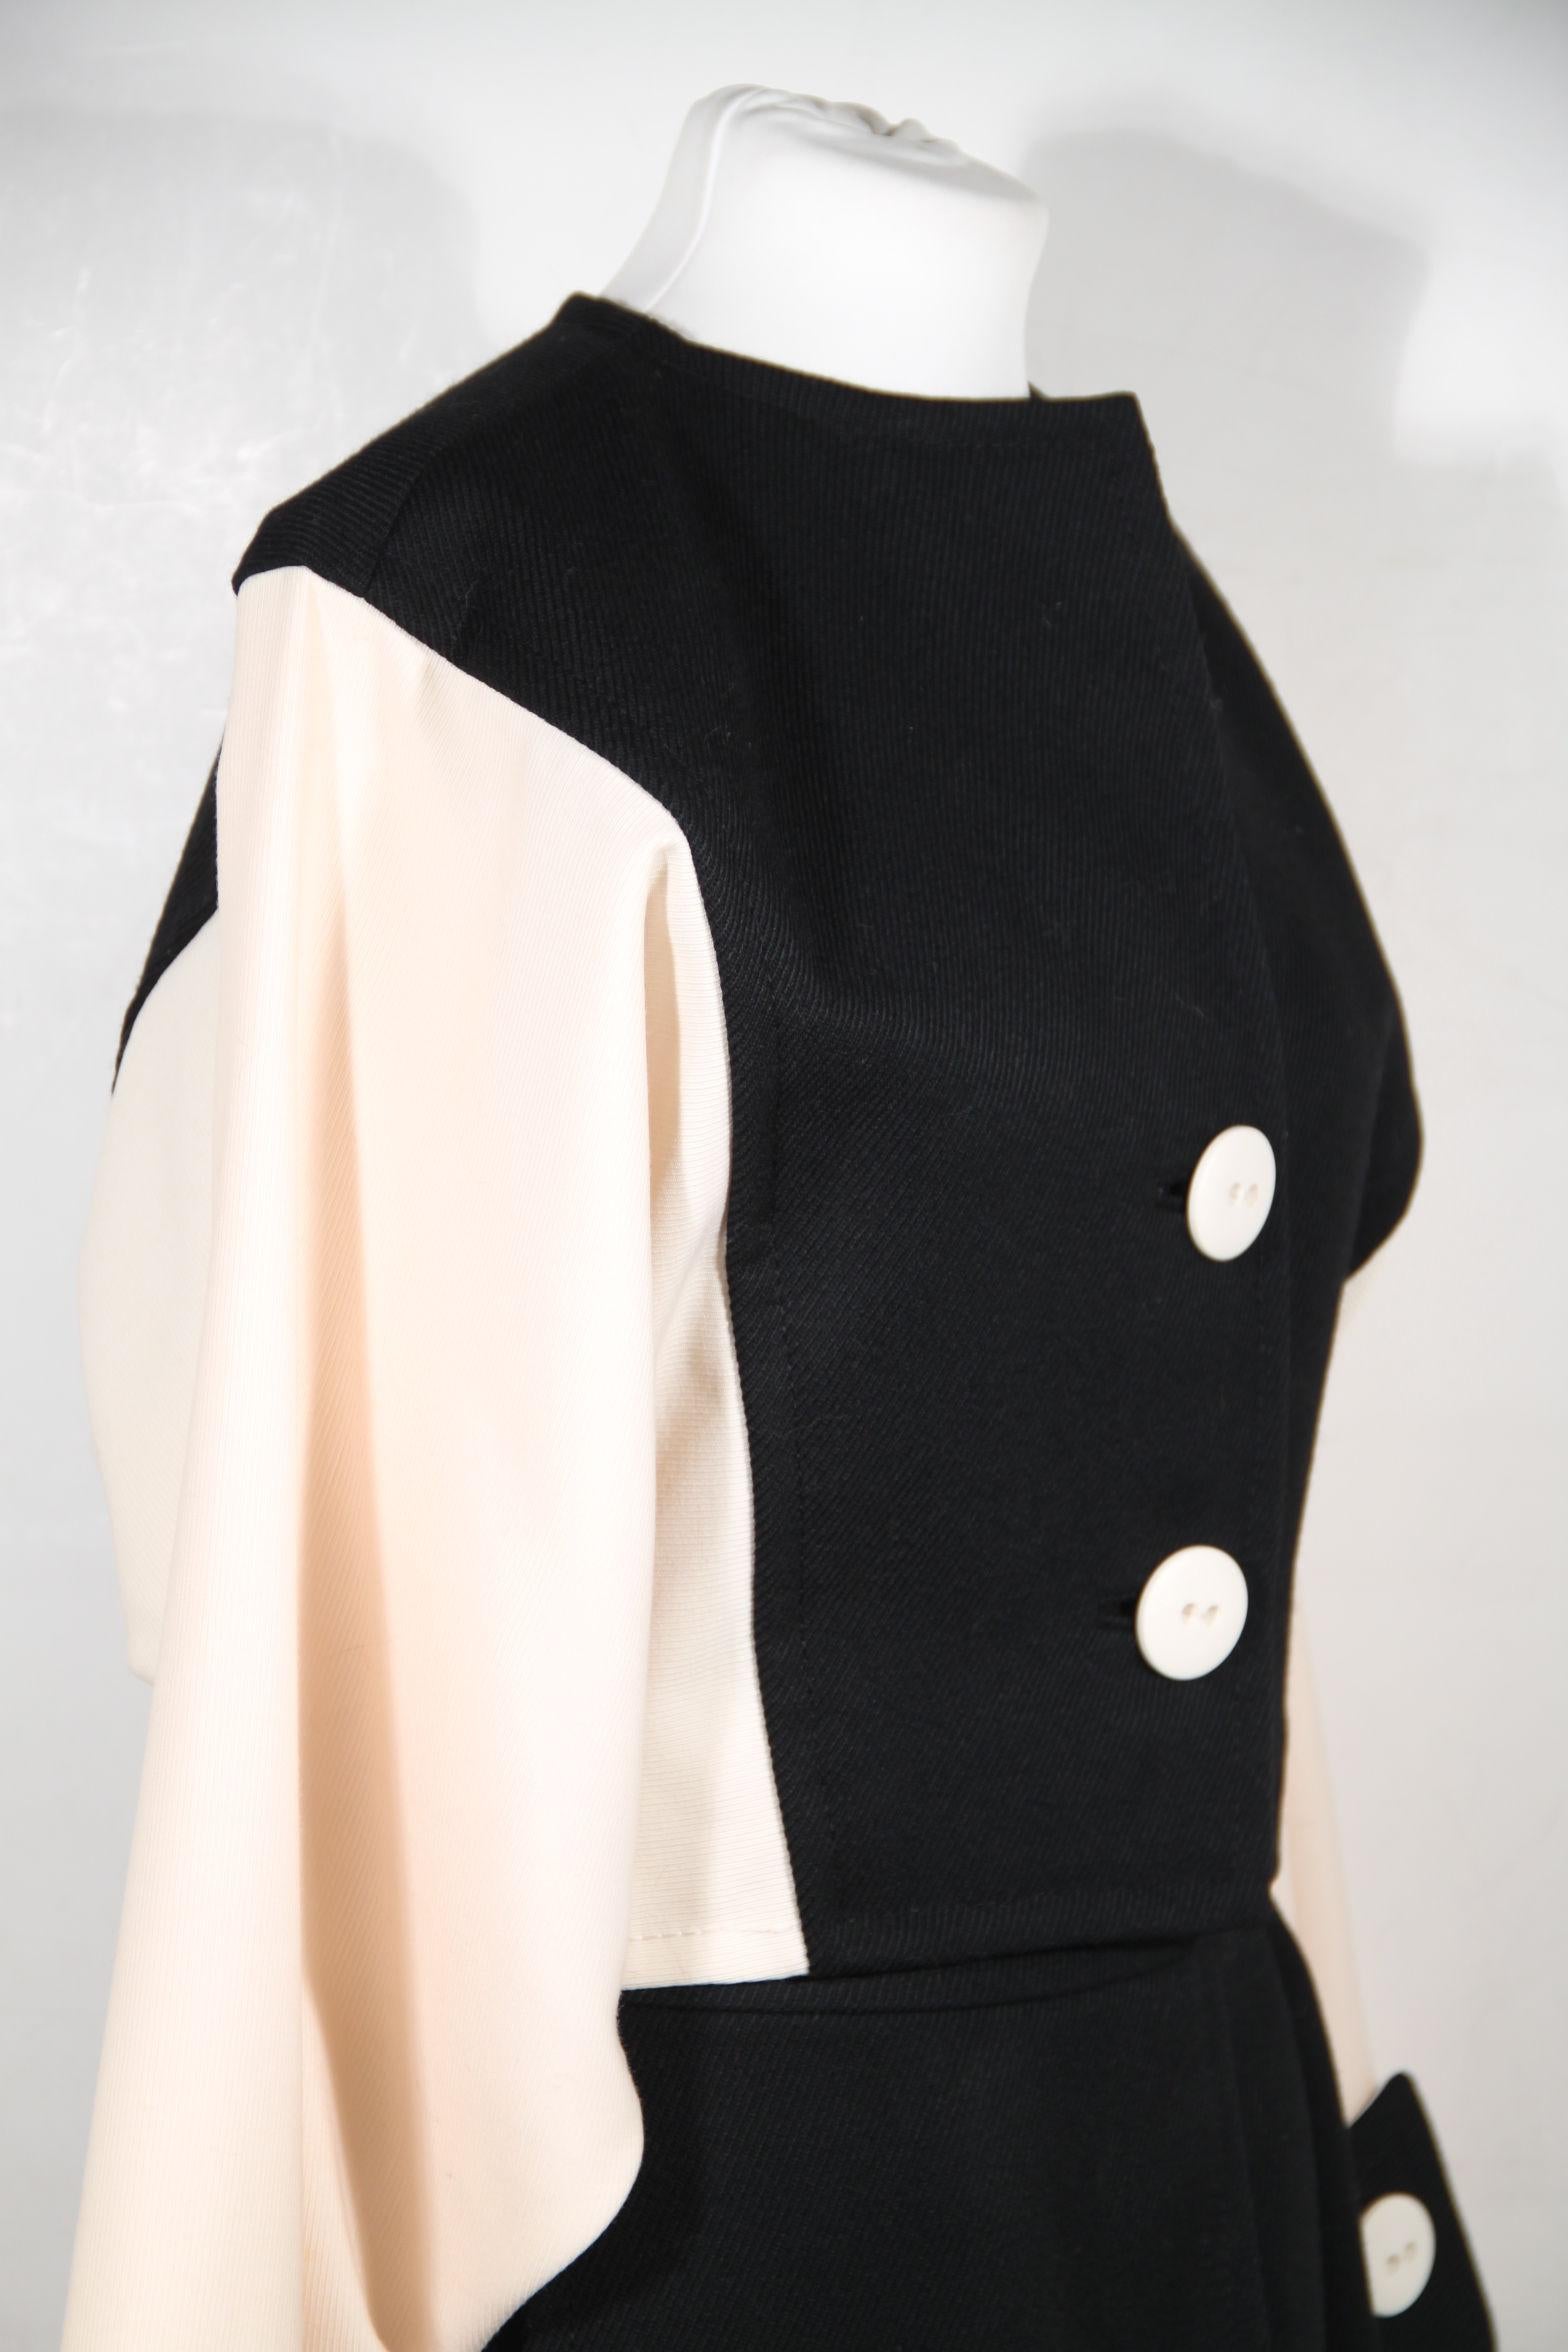 Women's Andrea Odicini Vintage Suit Black White Jacket and Skirt Set Size 44